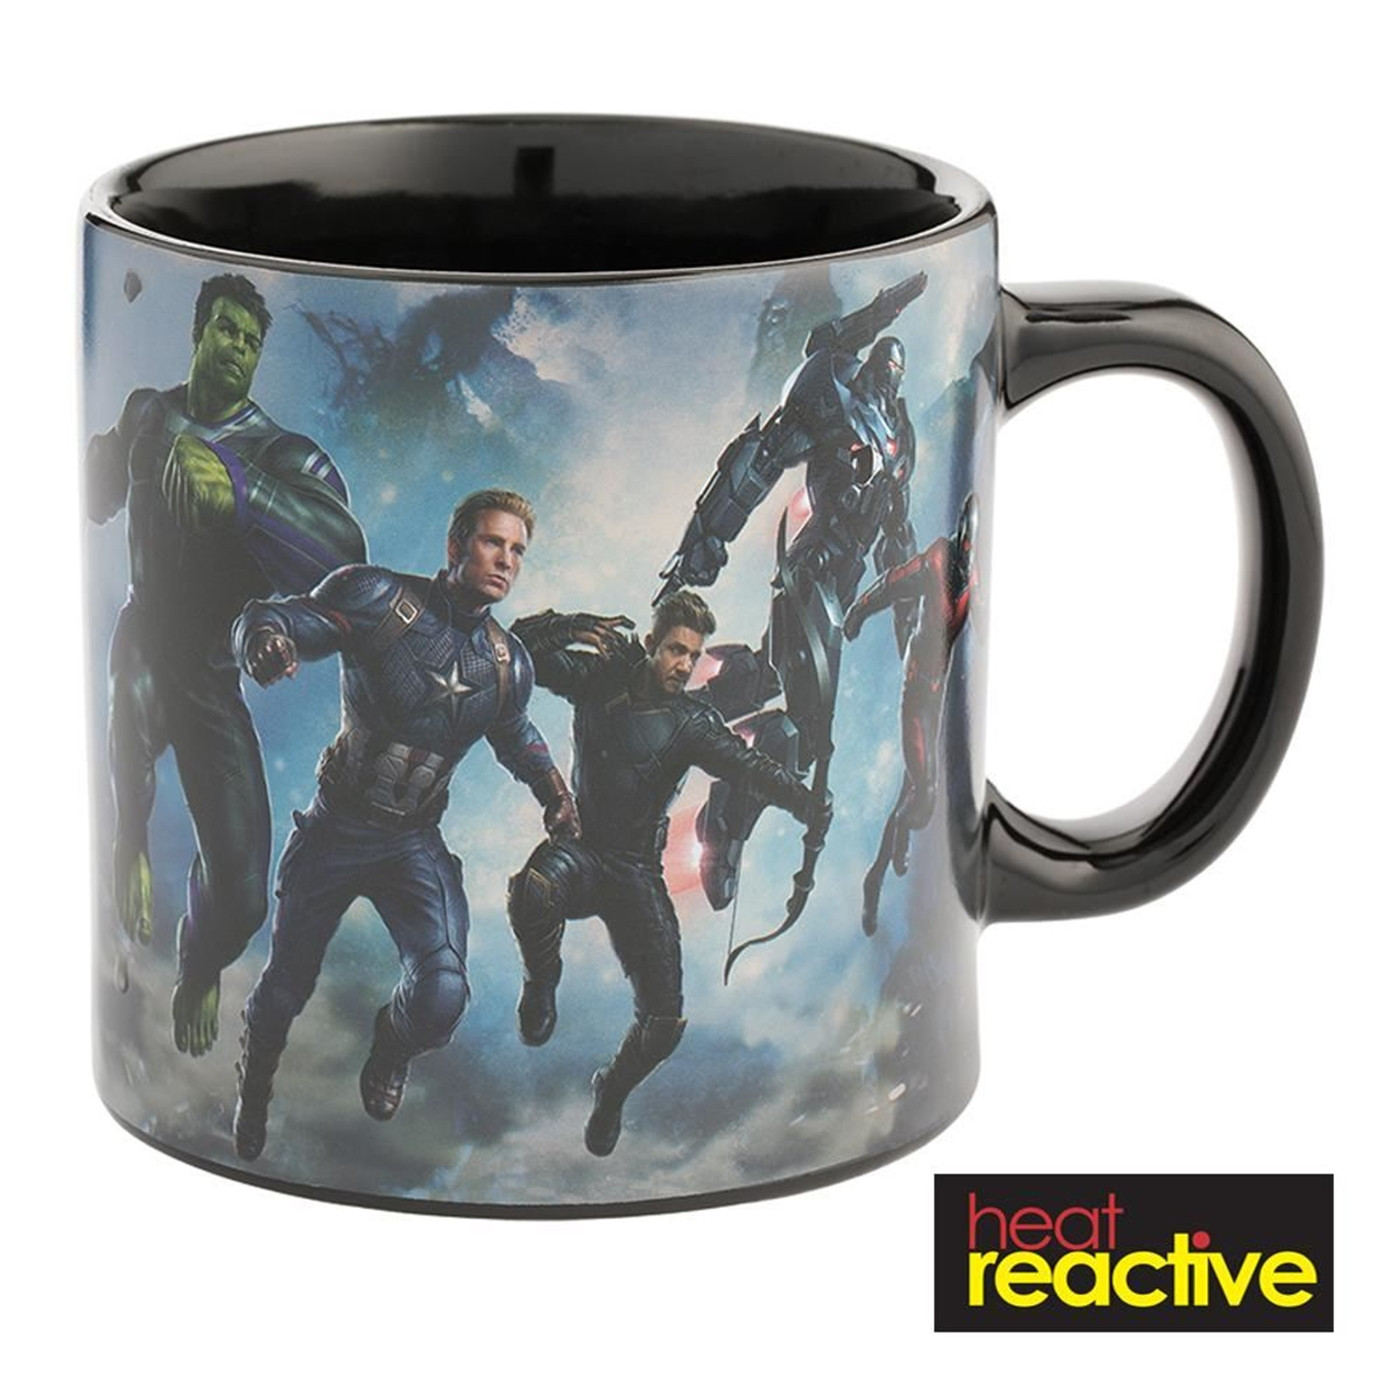 Avengers Endgame 20 oz. Heat Reactive Ceramic Mug